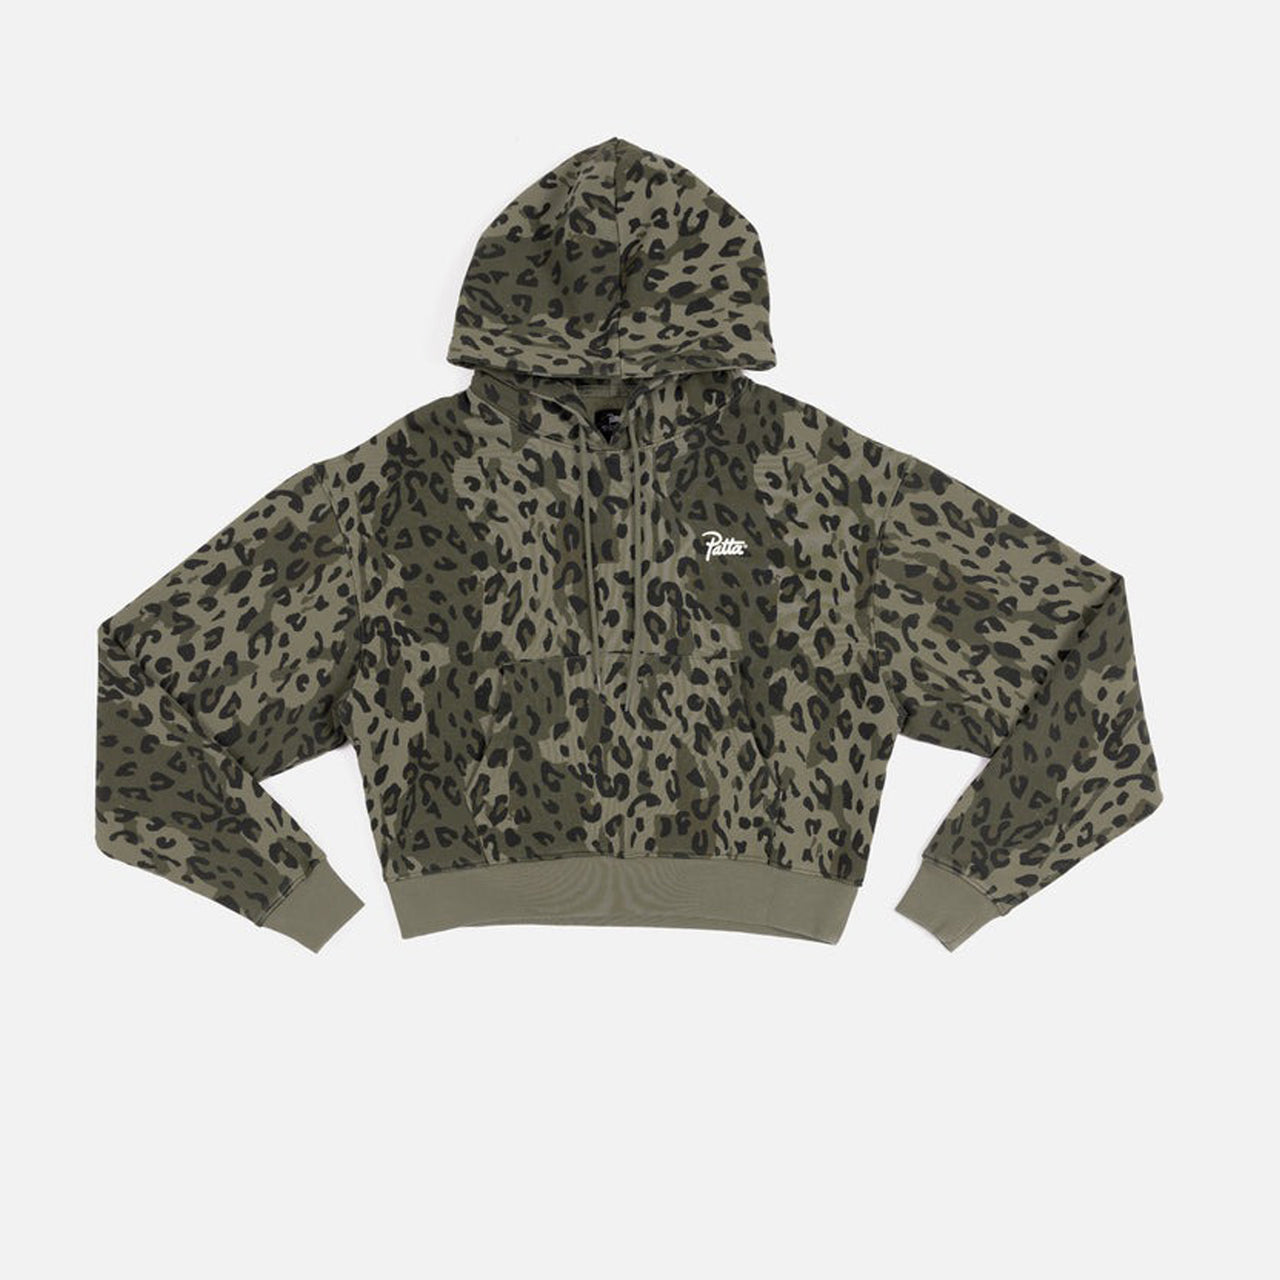 Patta Femme Leopard Cropped Hooded Sweater - Dusty Olive